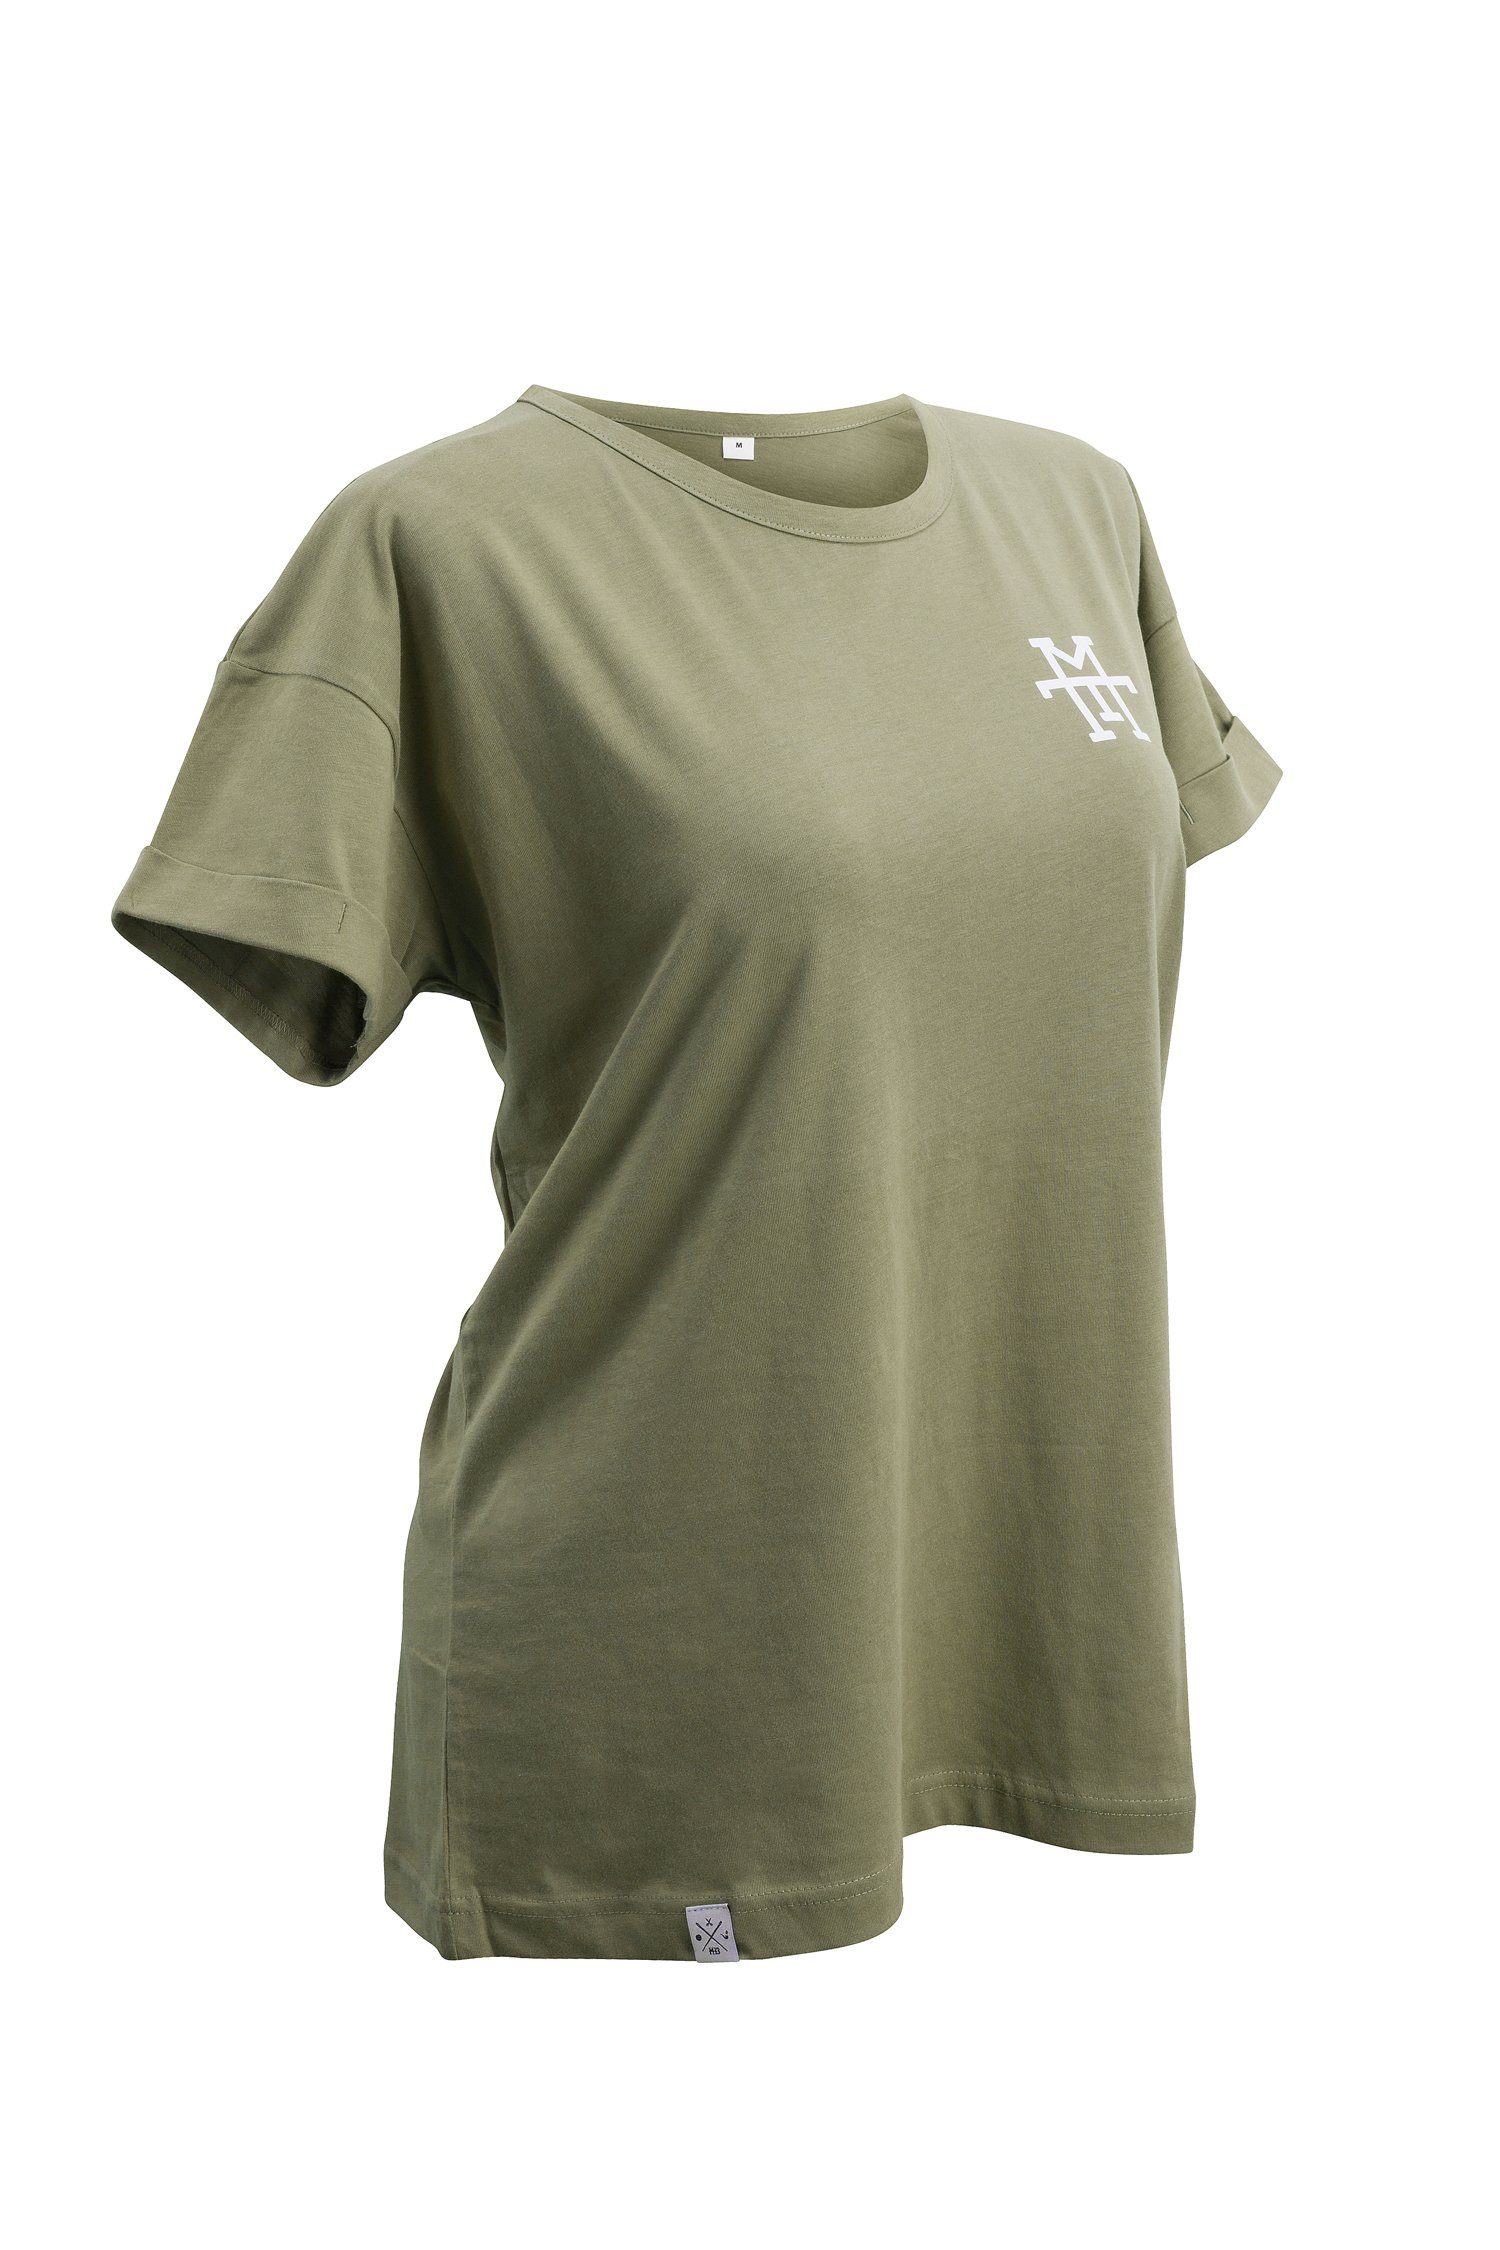 - T-Shirt T-Shirt Baumwolle Olive Oversize Manufaktur13 T-Shirt Boyfriend 100%